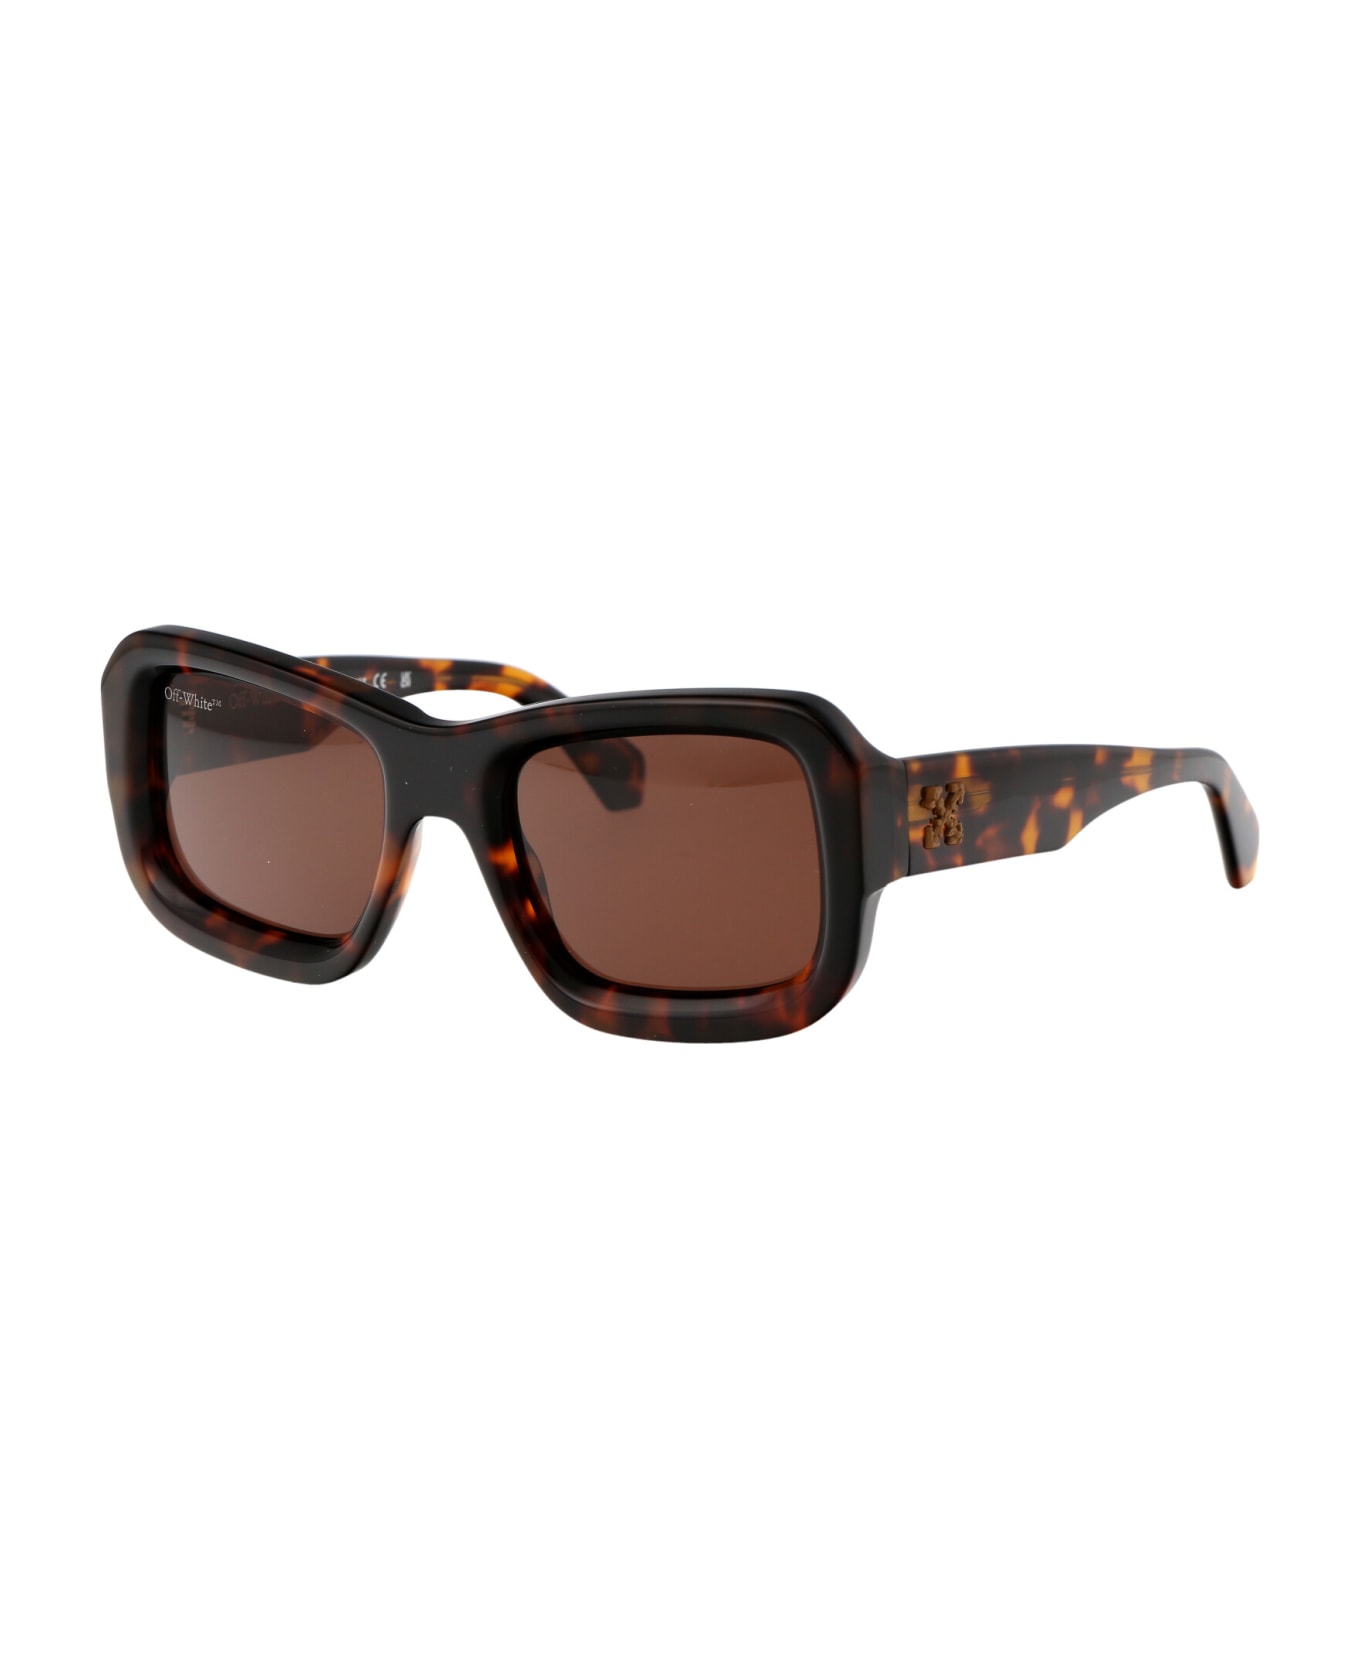 Off-White Verona Sunglasses - 6064 HAVANA